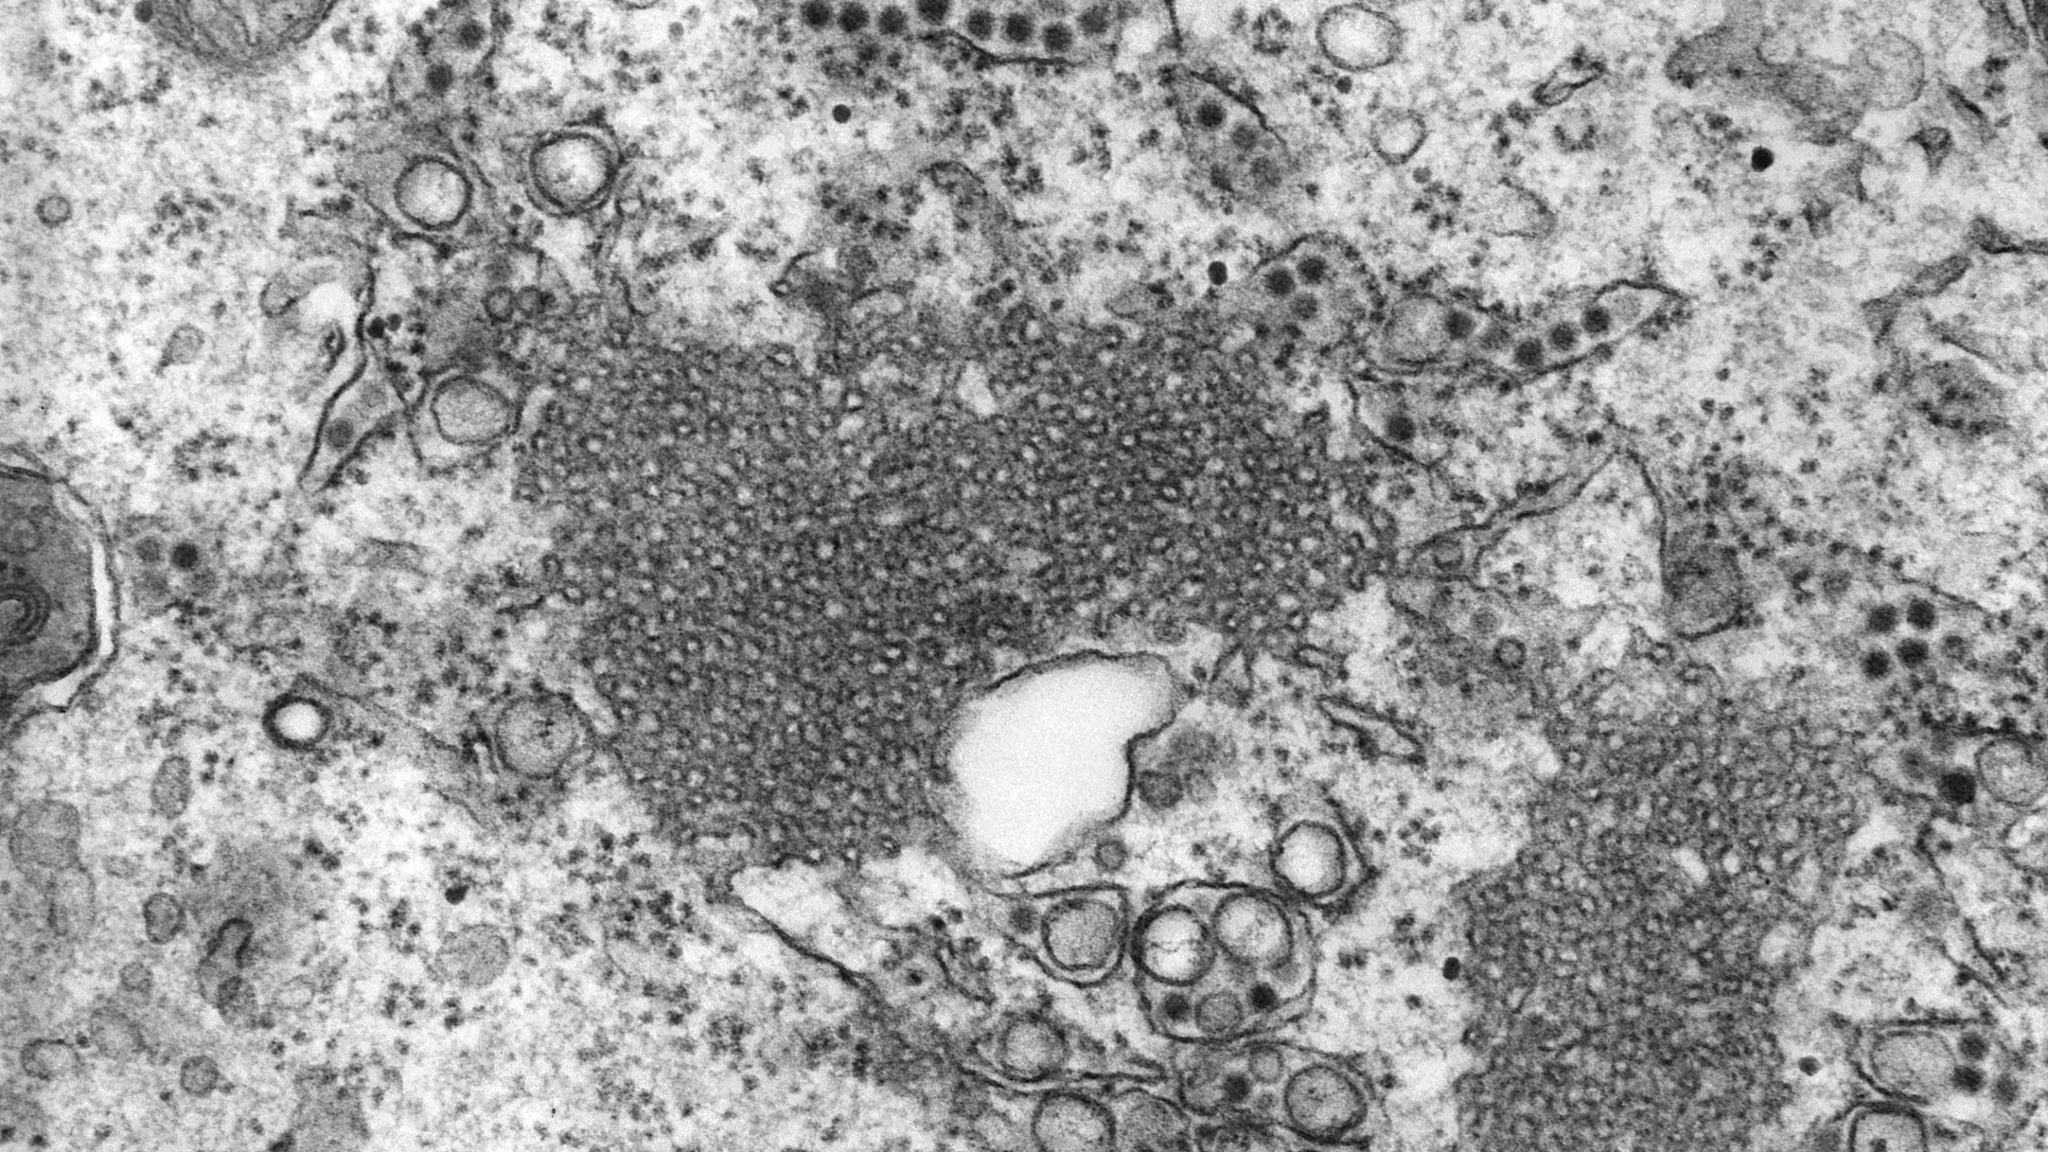 A transmission electron microscopic (TEM) image revealing the presence of St. Louis encephalitis virions.